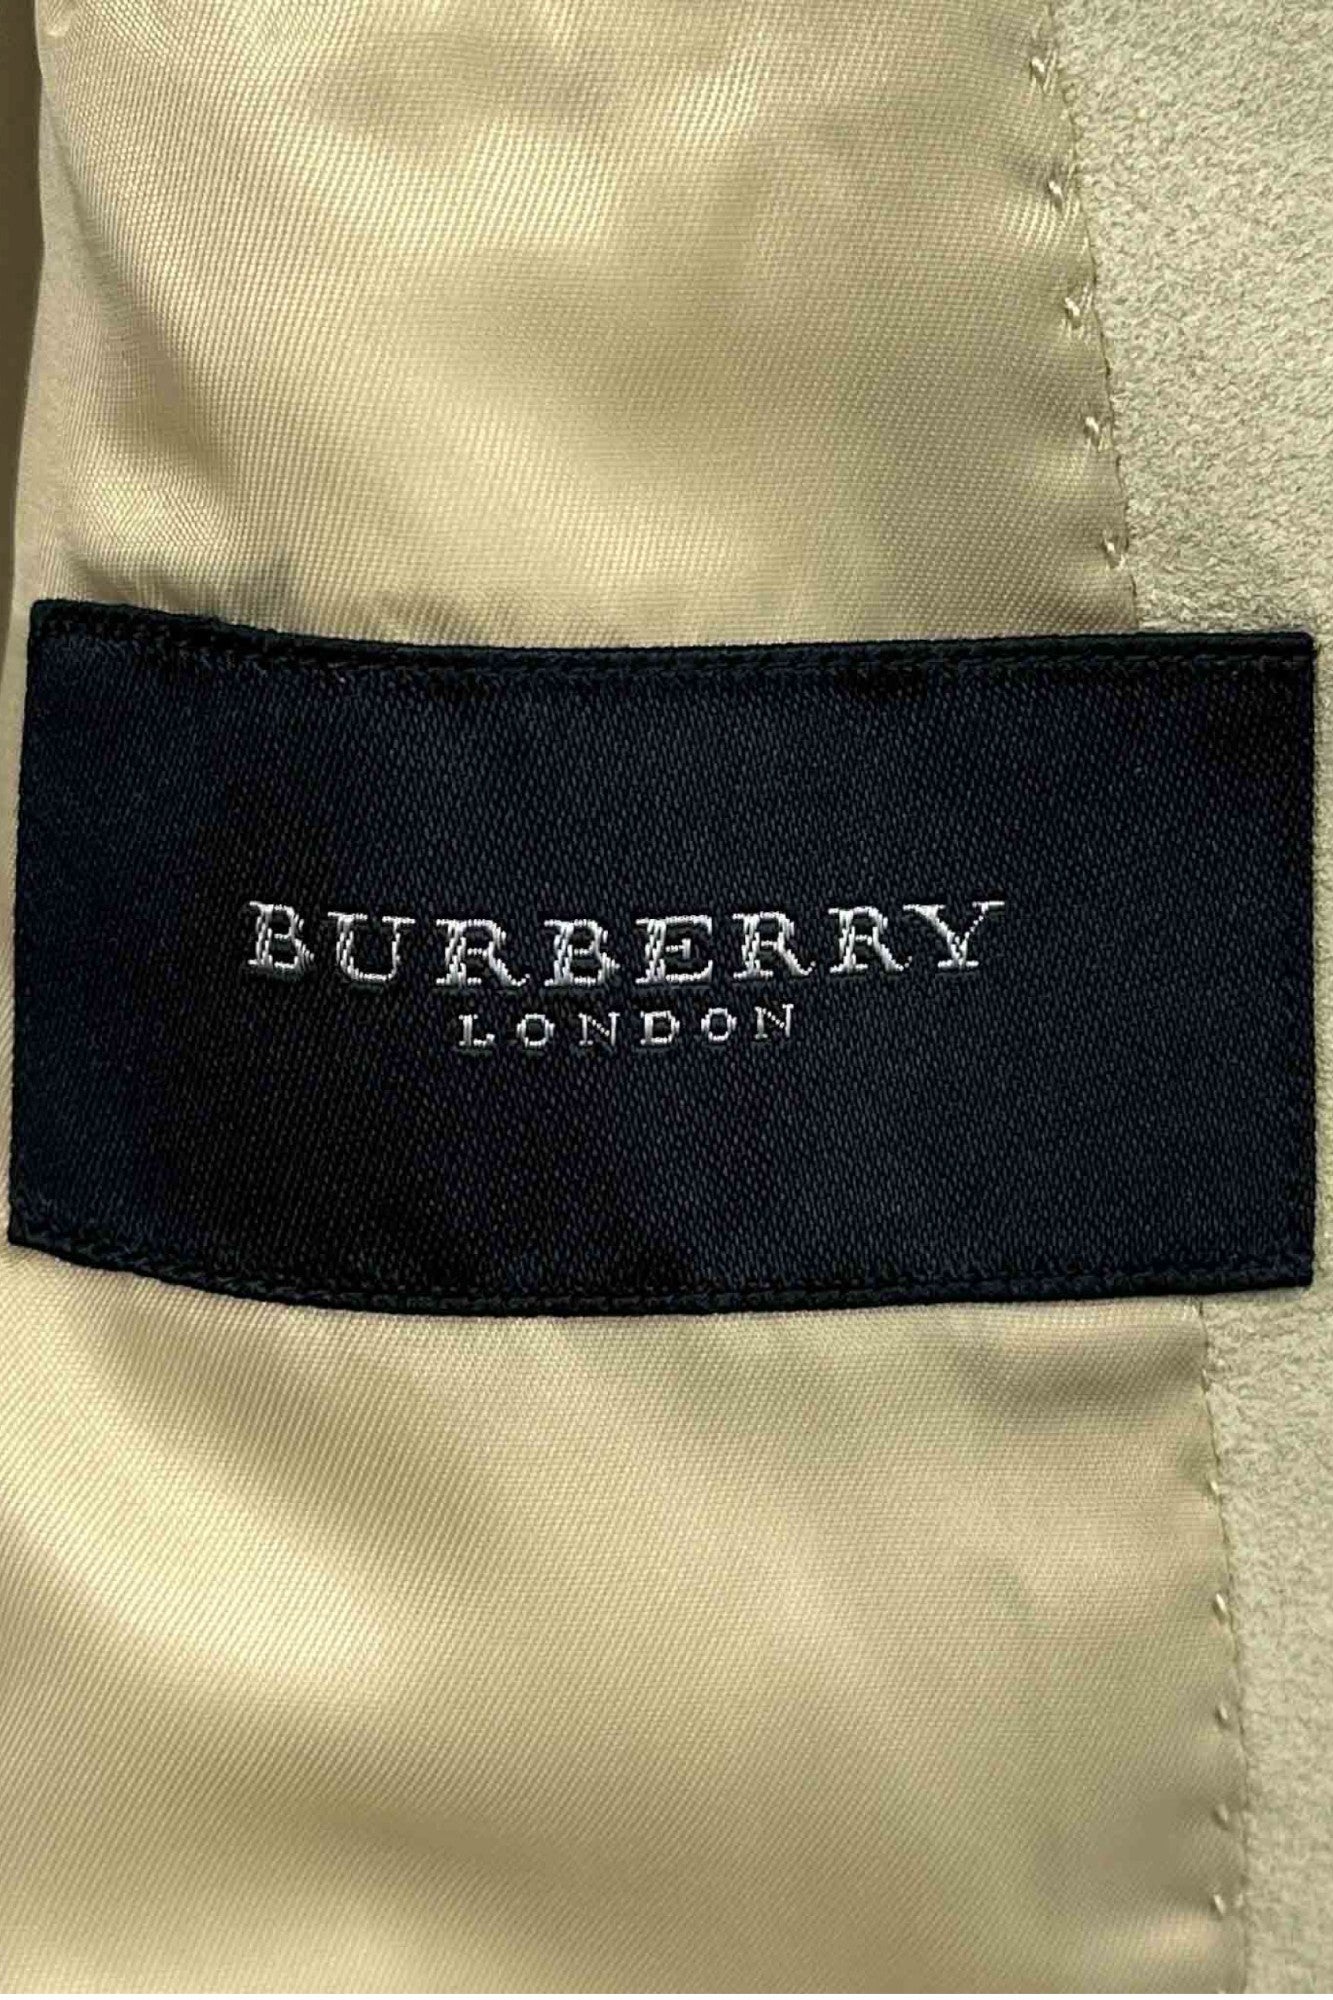 BURBERRY LONDON 绒面革夹克